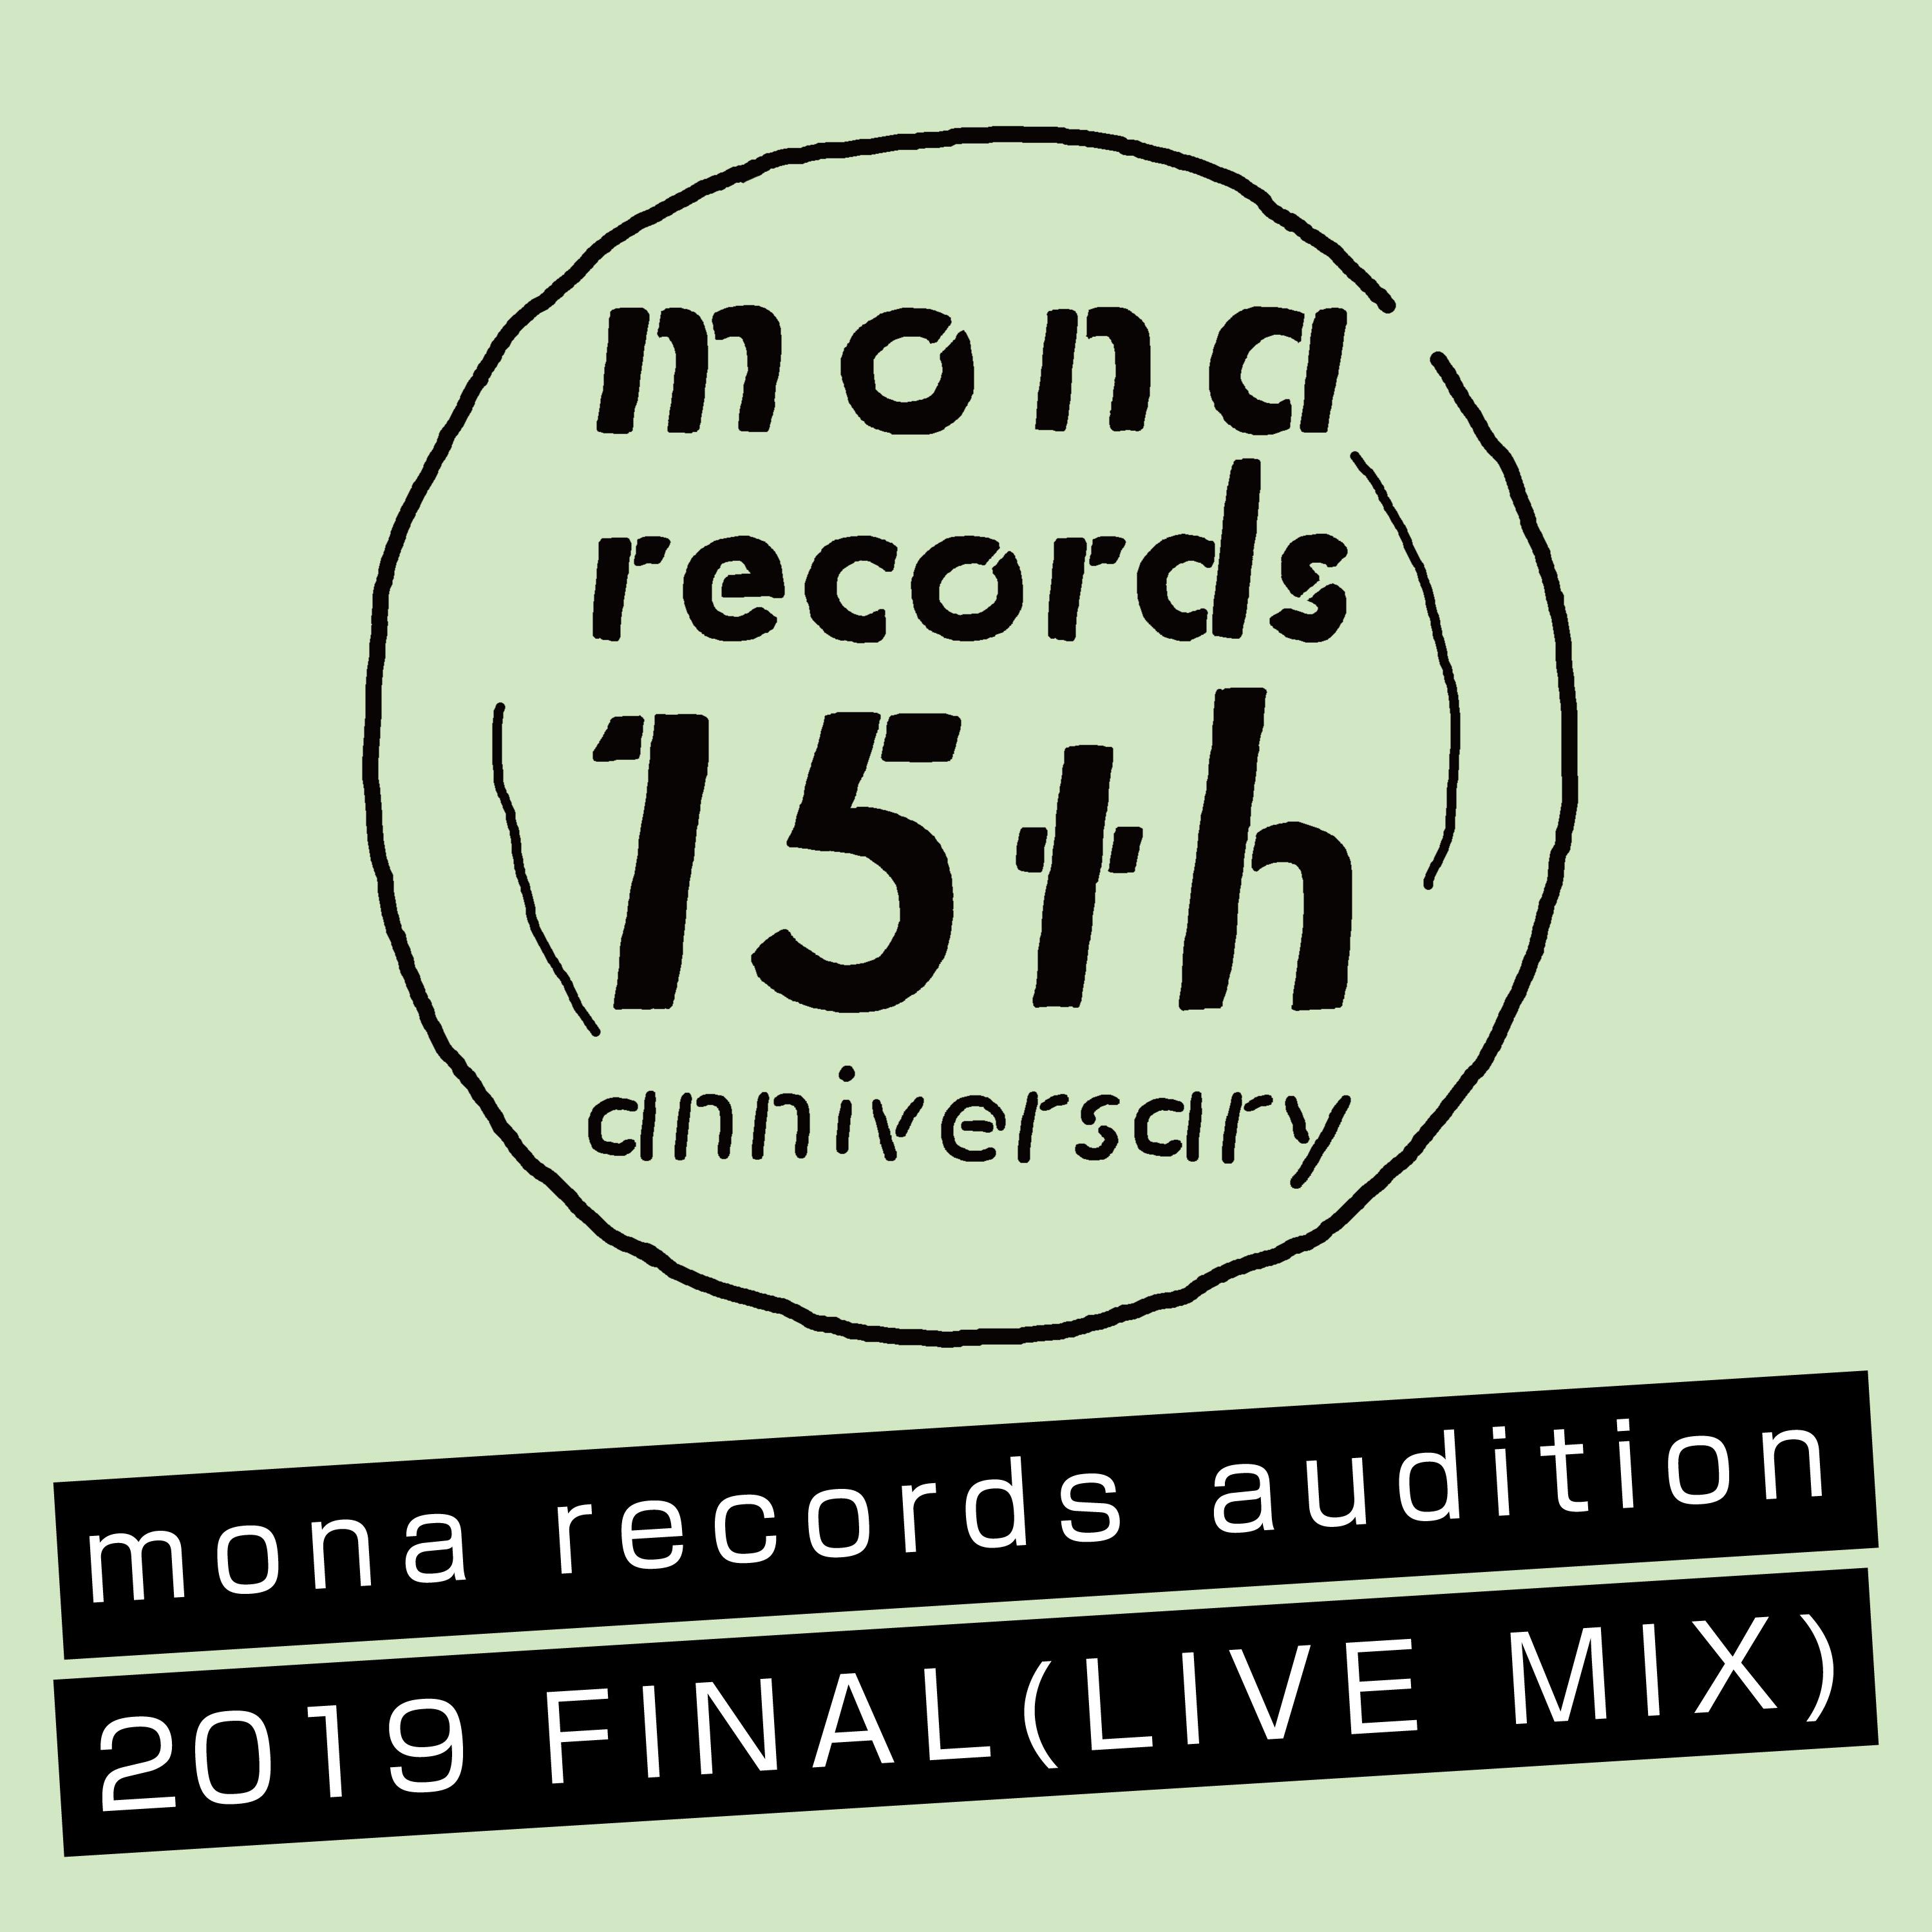 mona records audition 2019 FINAL(LIVE MIX)